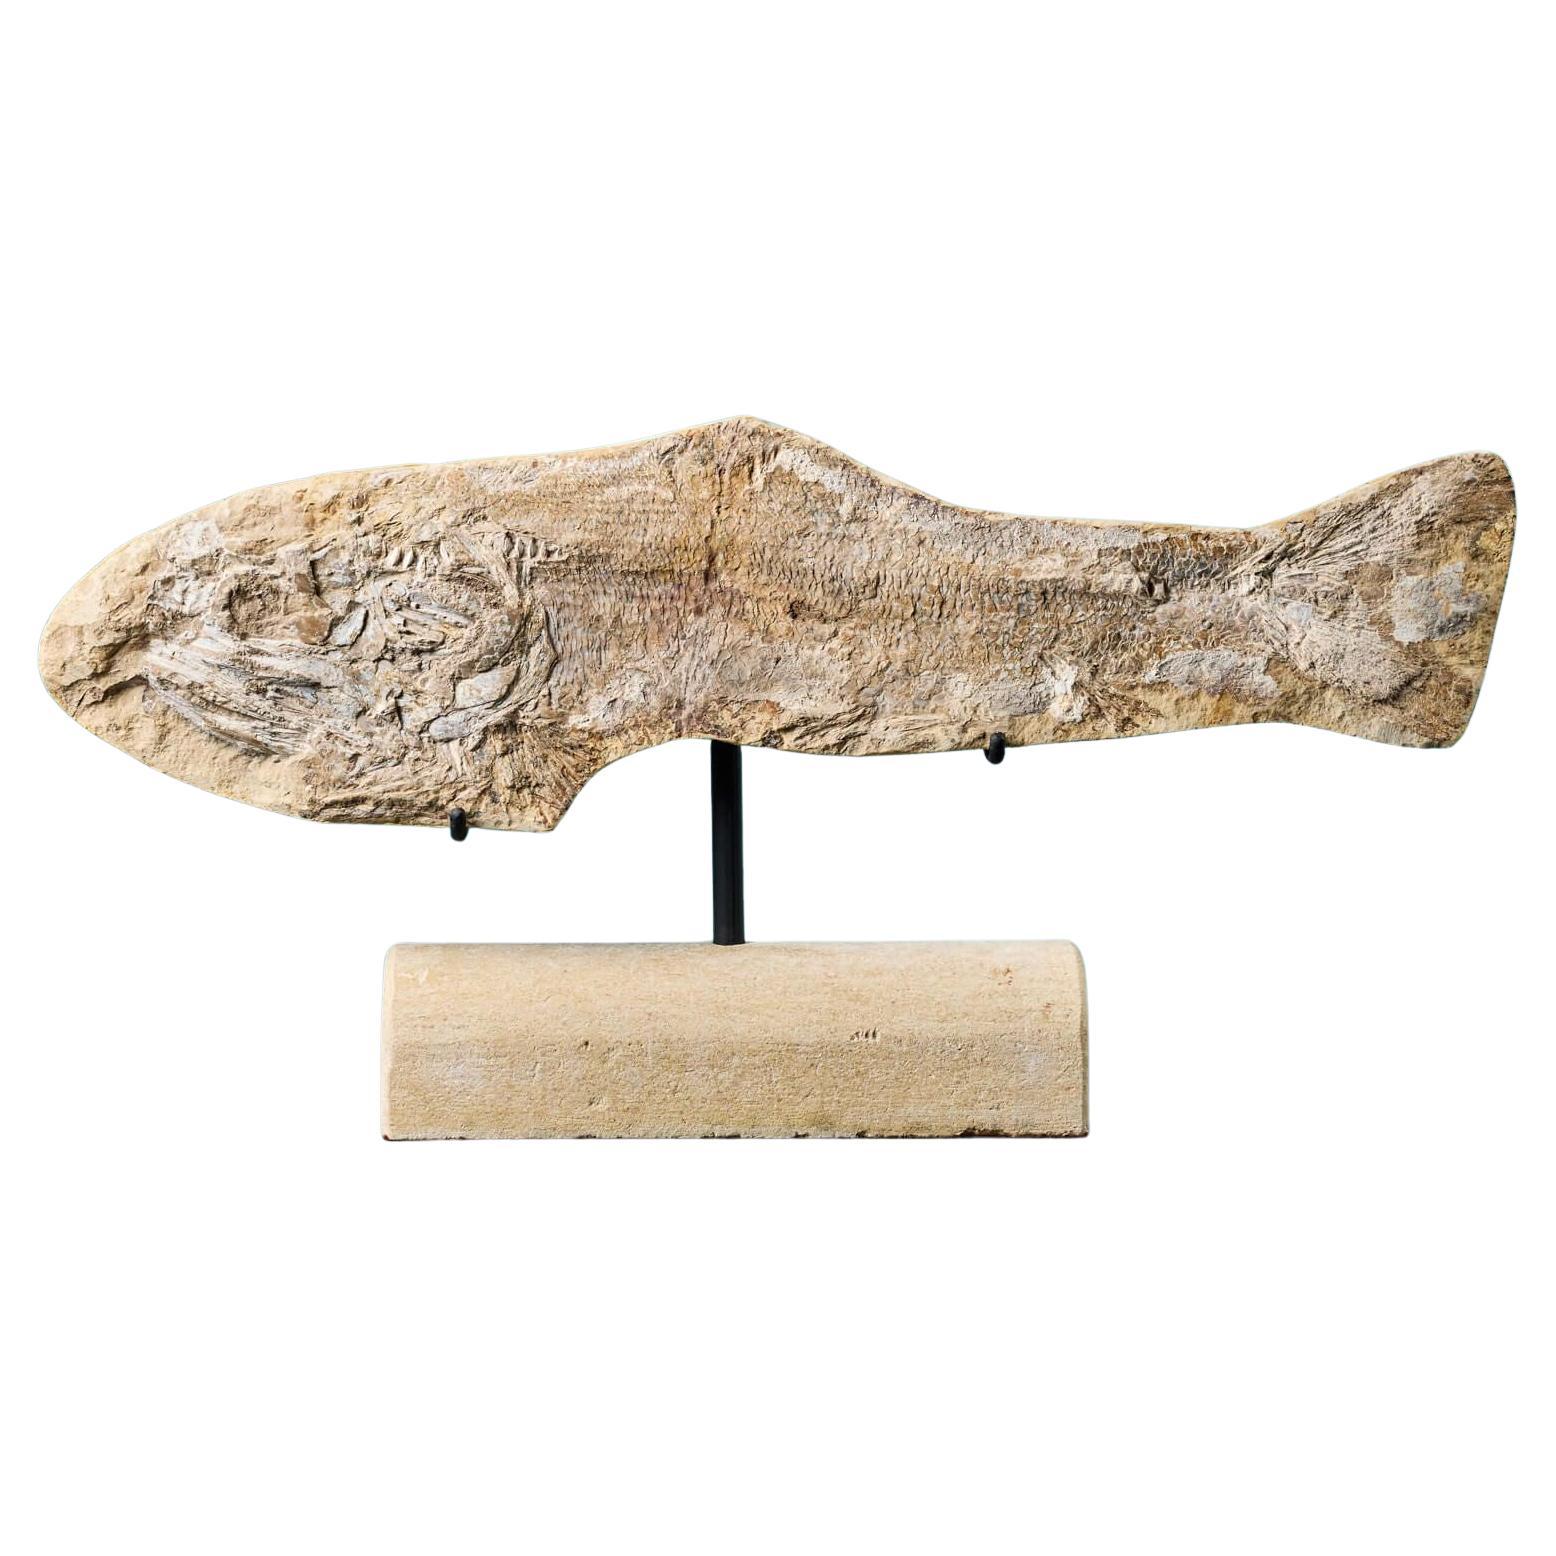 Prehistoric Fossil Fish Specimen For Sale